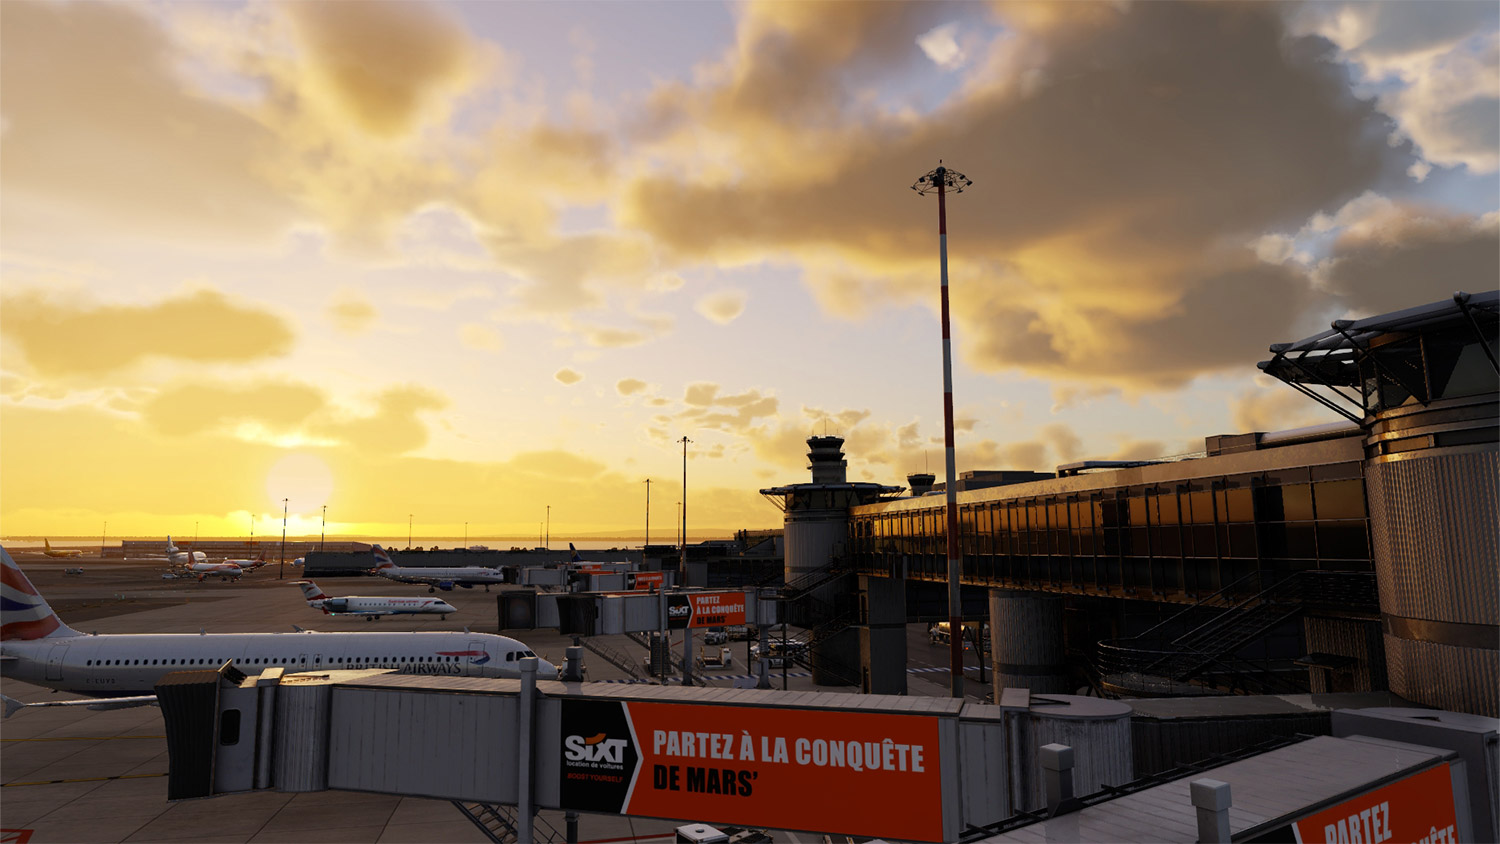 Airport Marseille XP